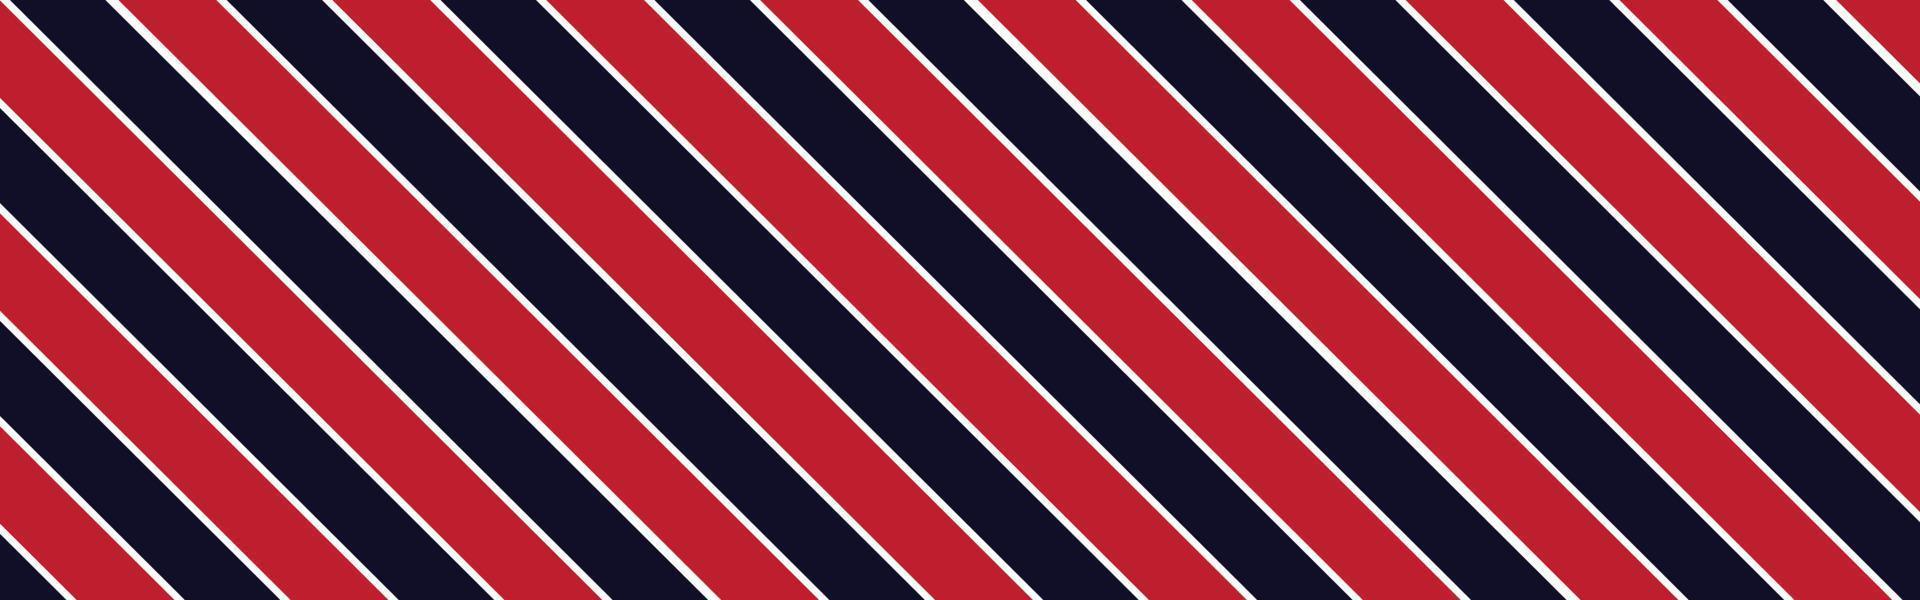 Striped-pattern, red, white, simple, minimal, minimalist, lined-pattern,  stripe, modern, trendy, basic, digital, pattern, abstract, lines, line,  line-art, jewel-color, Tote Bag by PrintedDreams